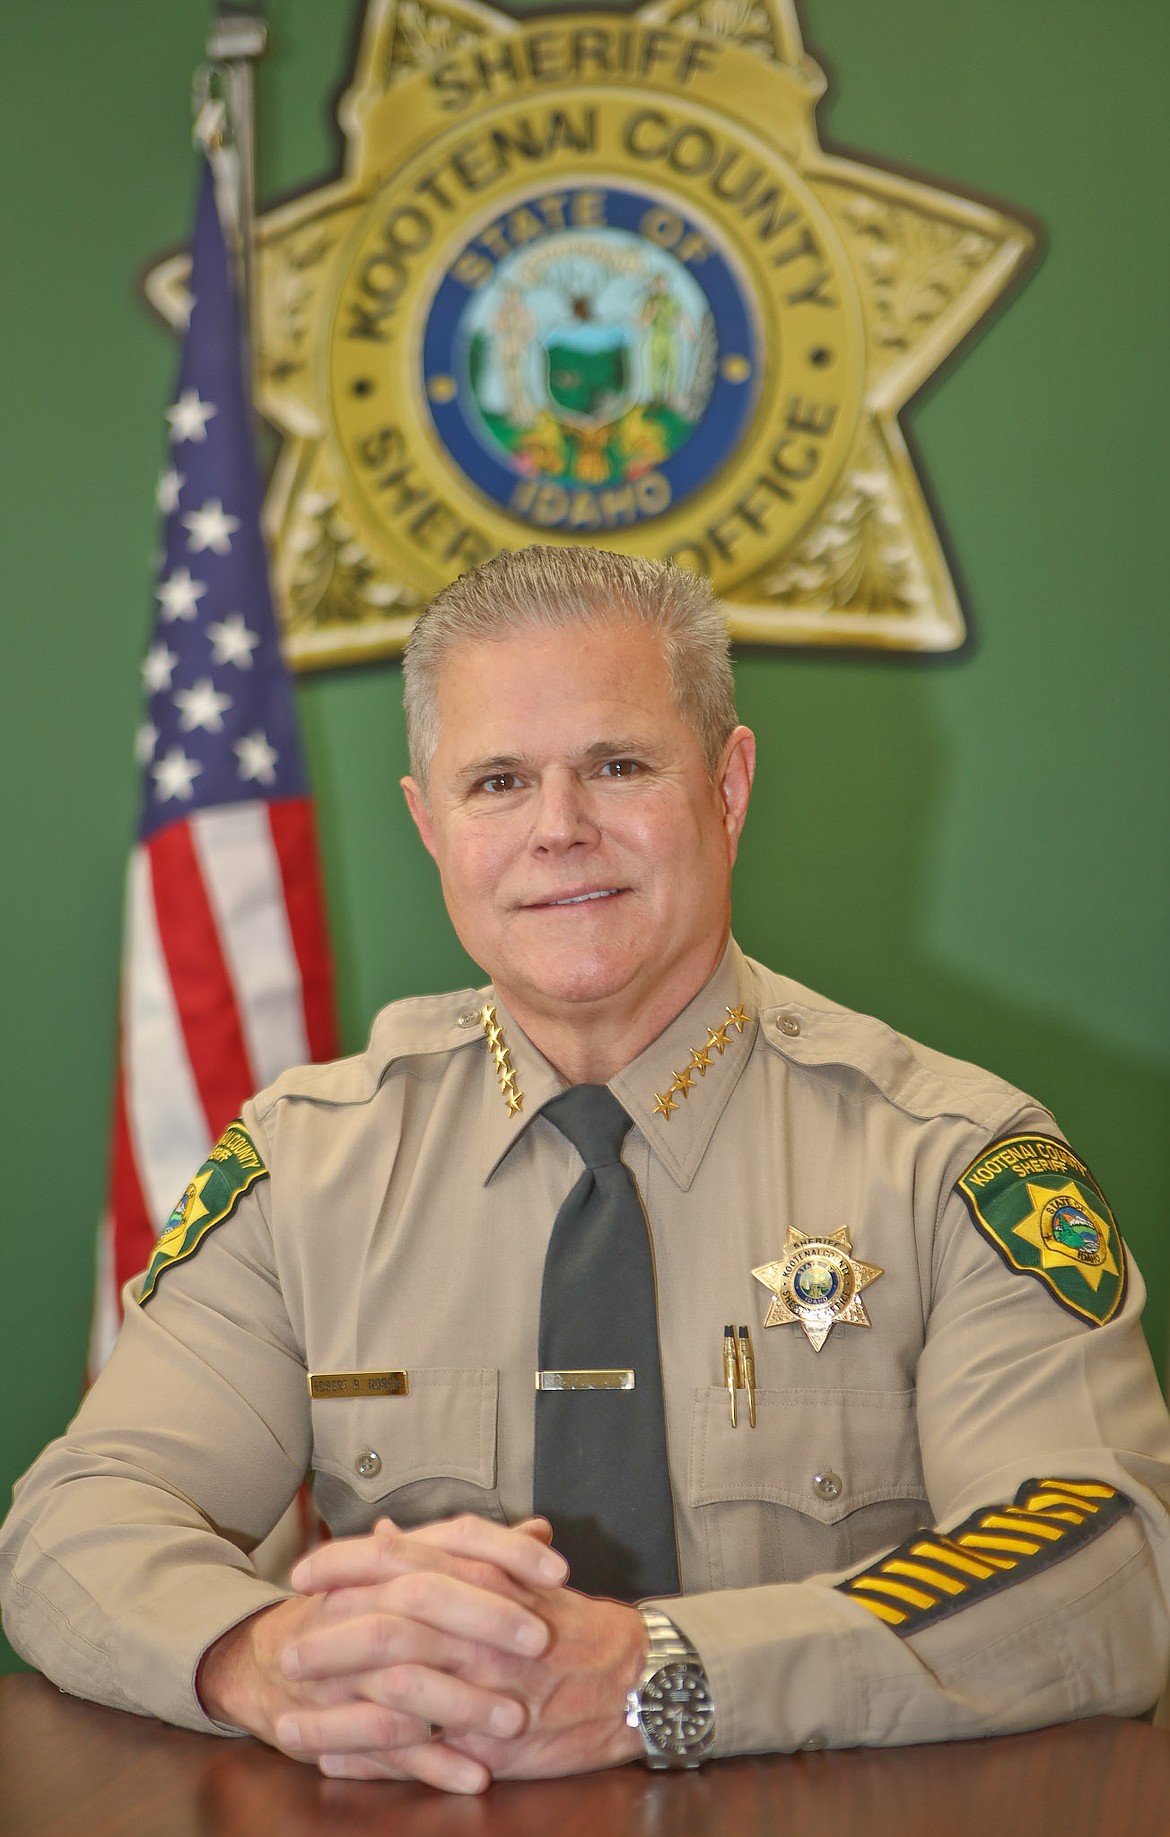 Sheriff Robert "Bob" Norris